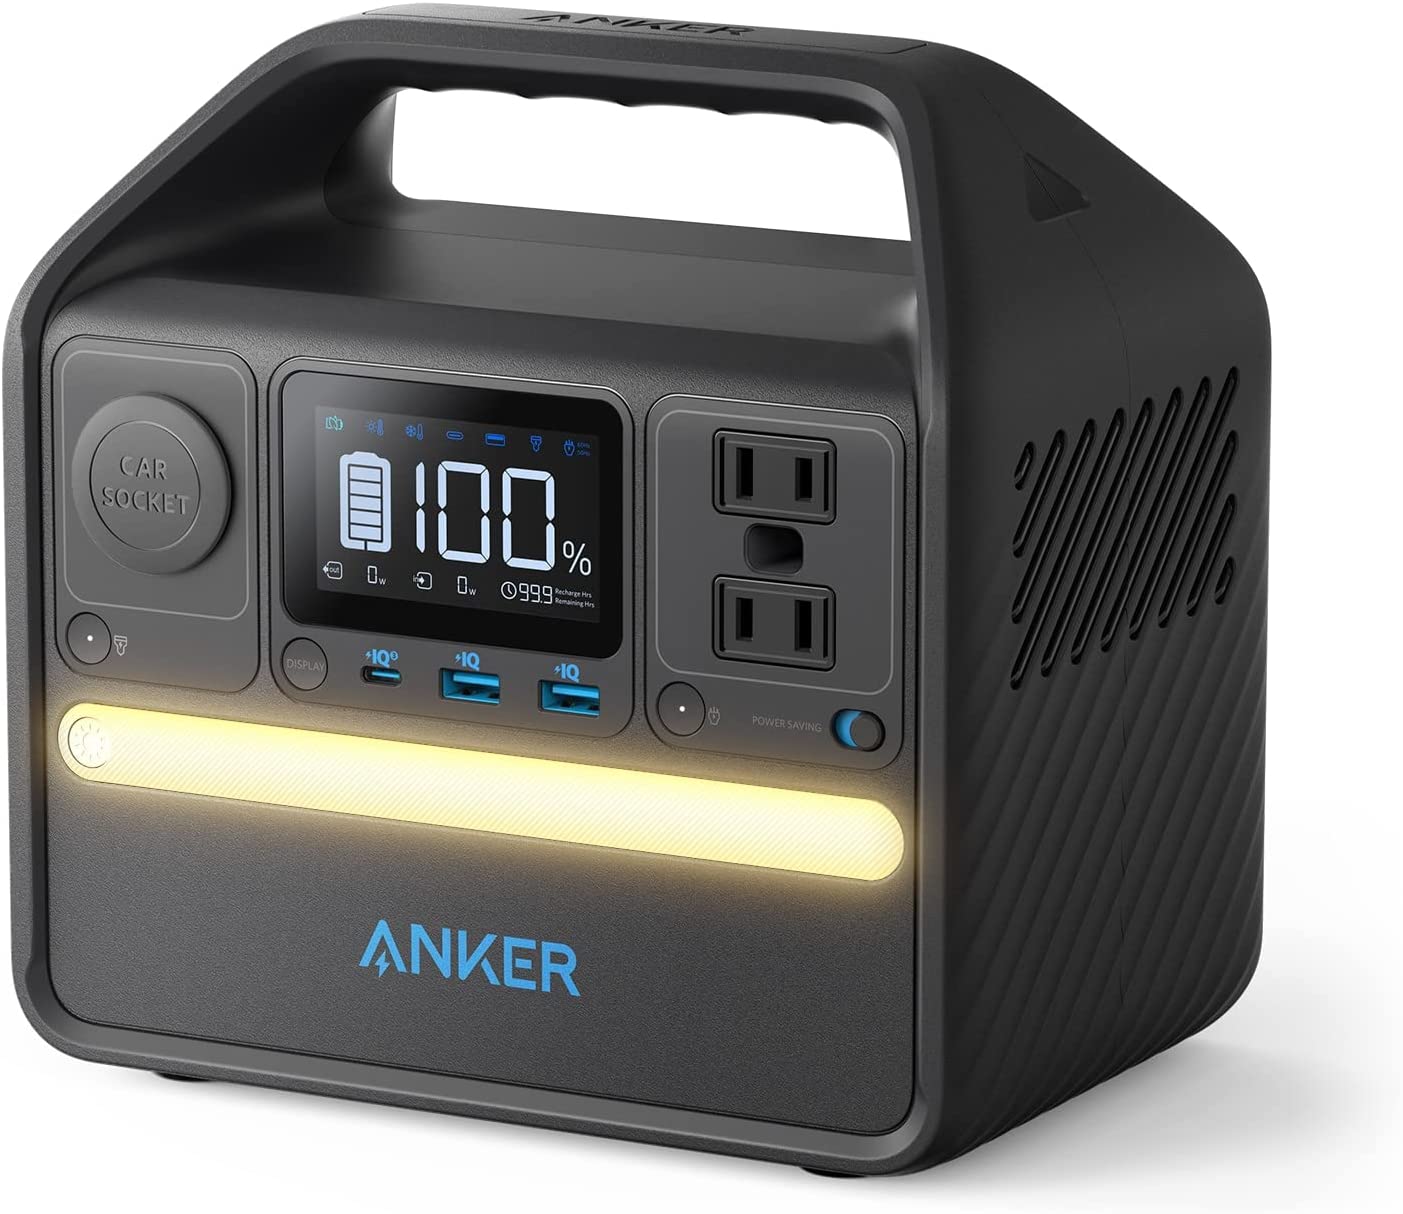 Anker- 521 Portable Power Station $199.99